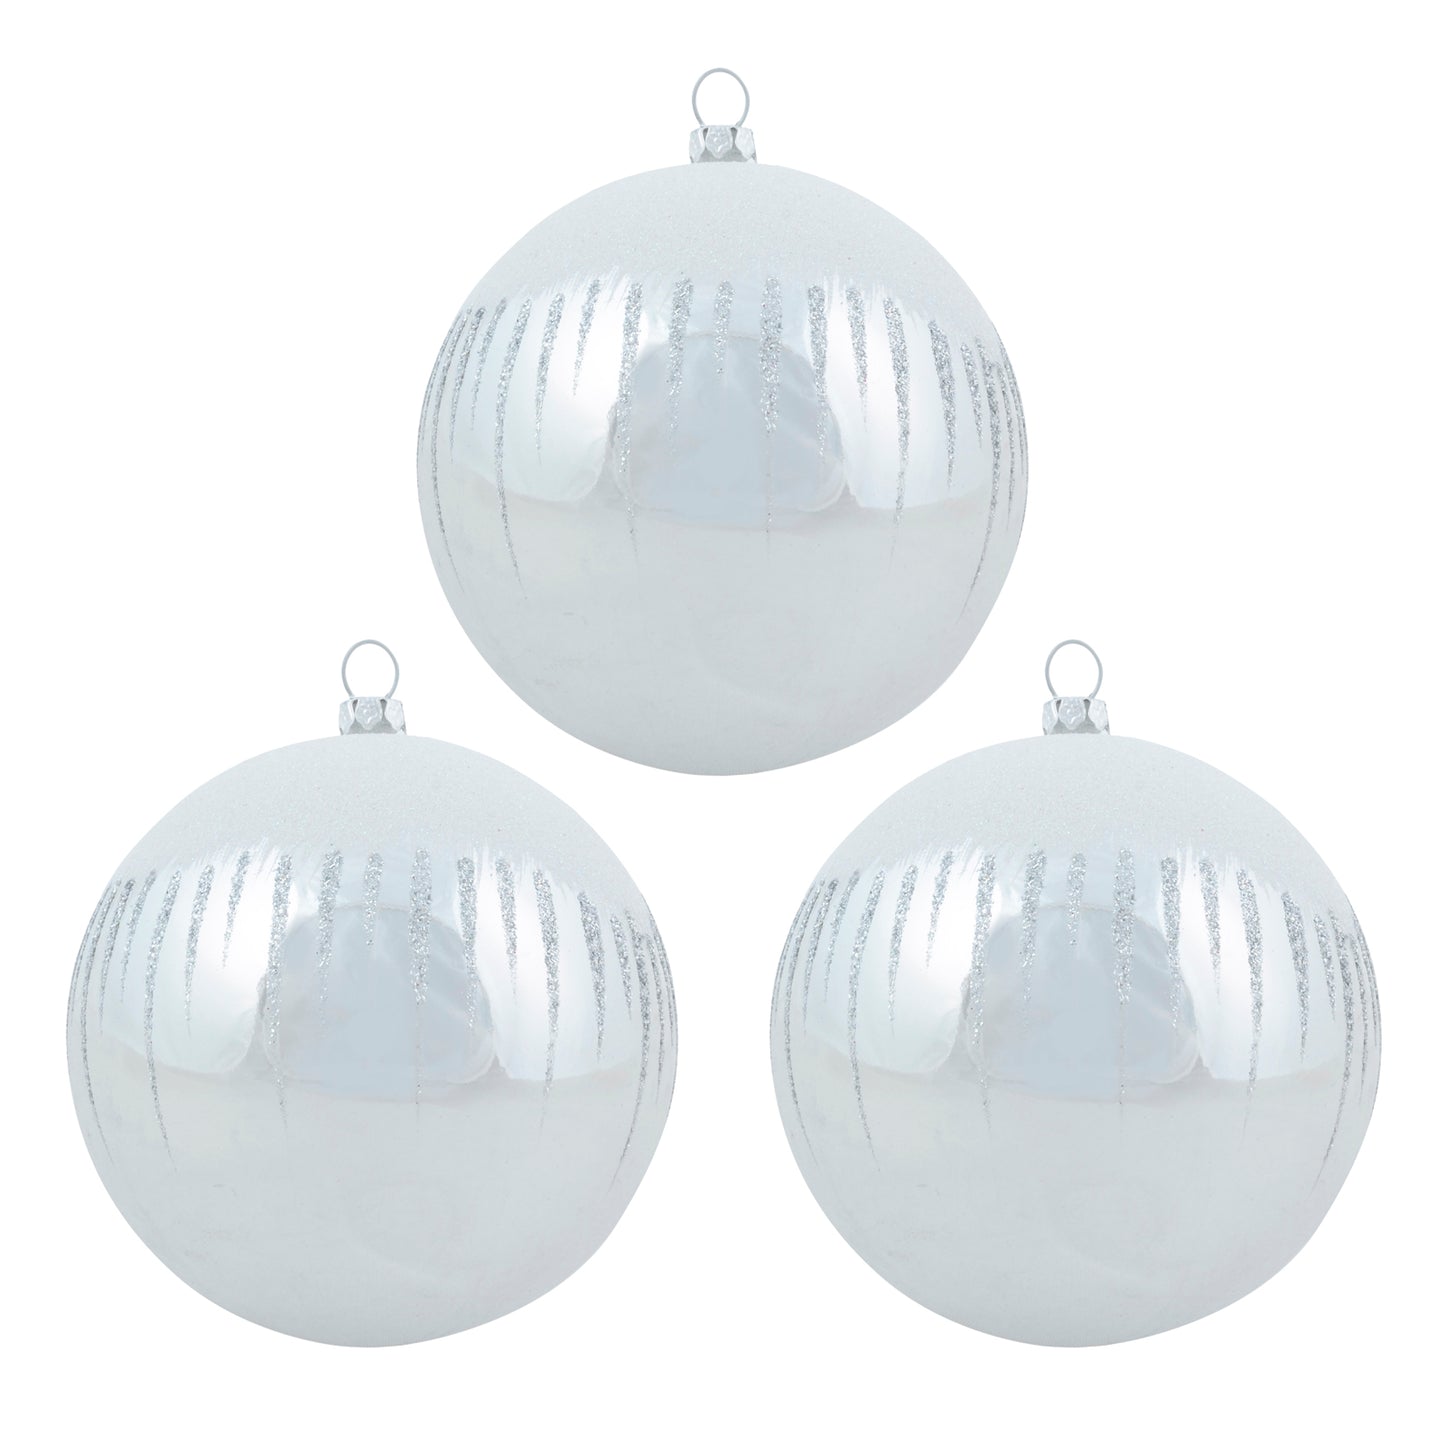 Mr Crimbo 3 x 10cm Shiny Glitter Snowscape Christmas Baubles - MrCrimbo.co.uk -XS6490 - Silver -Baubles